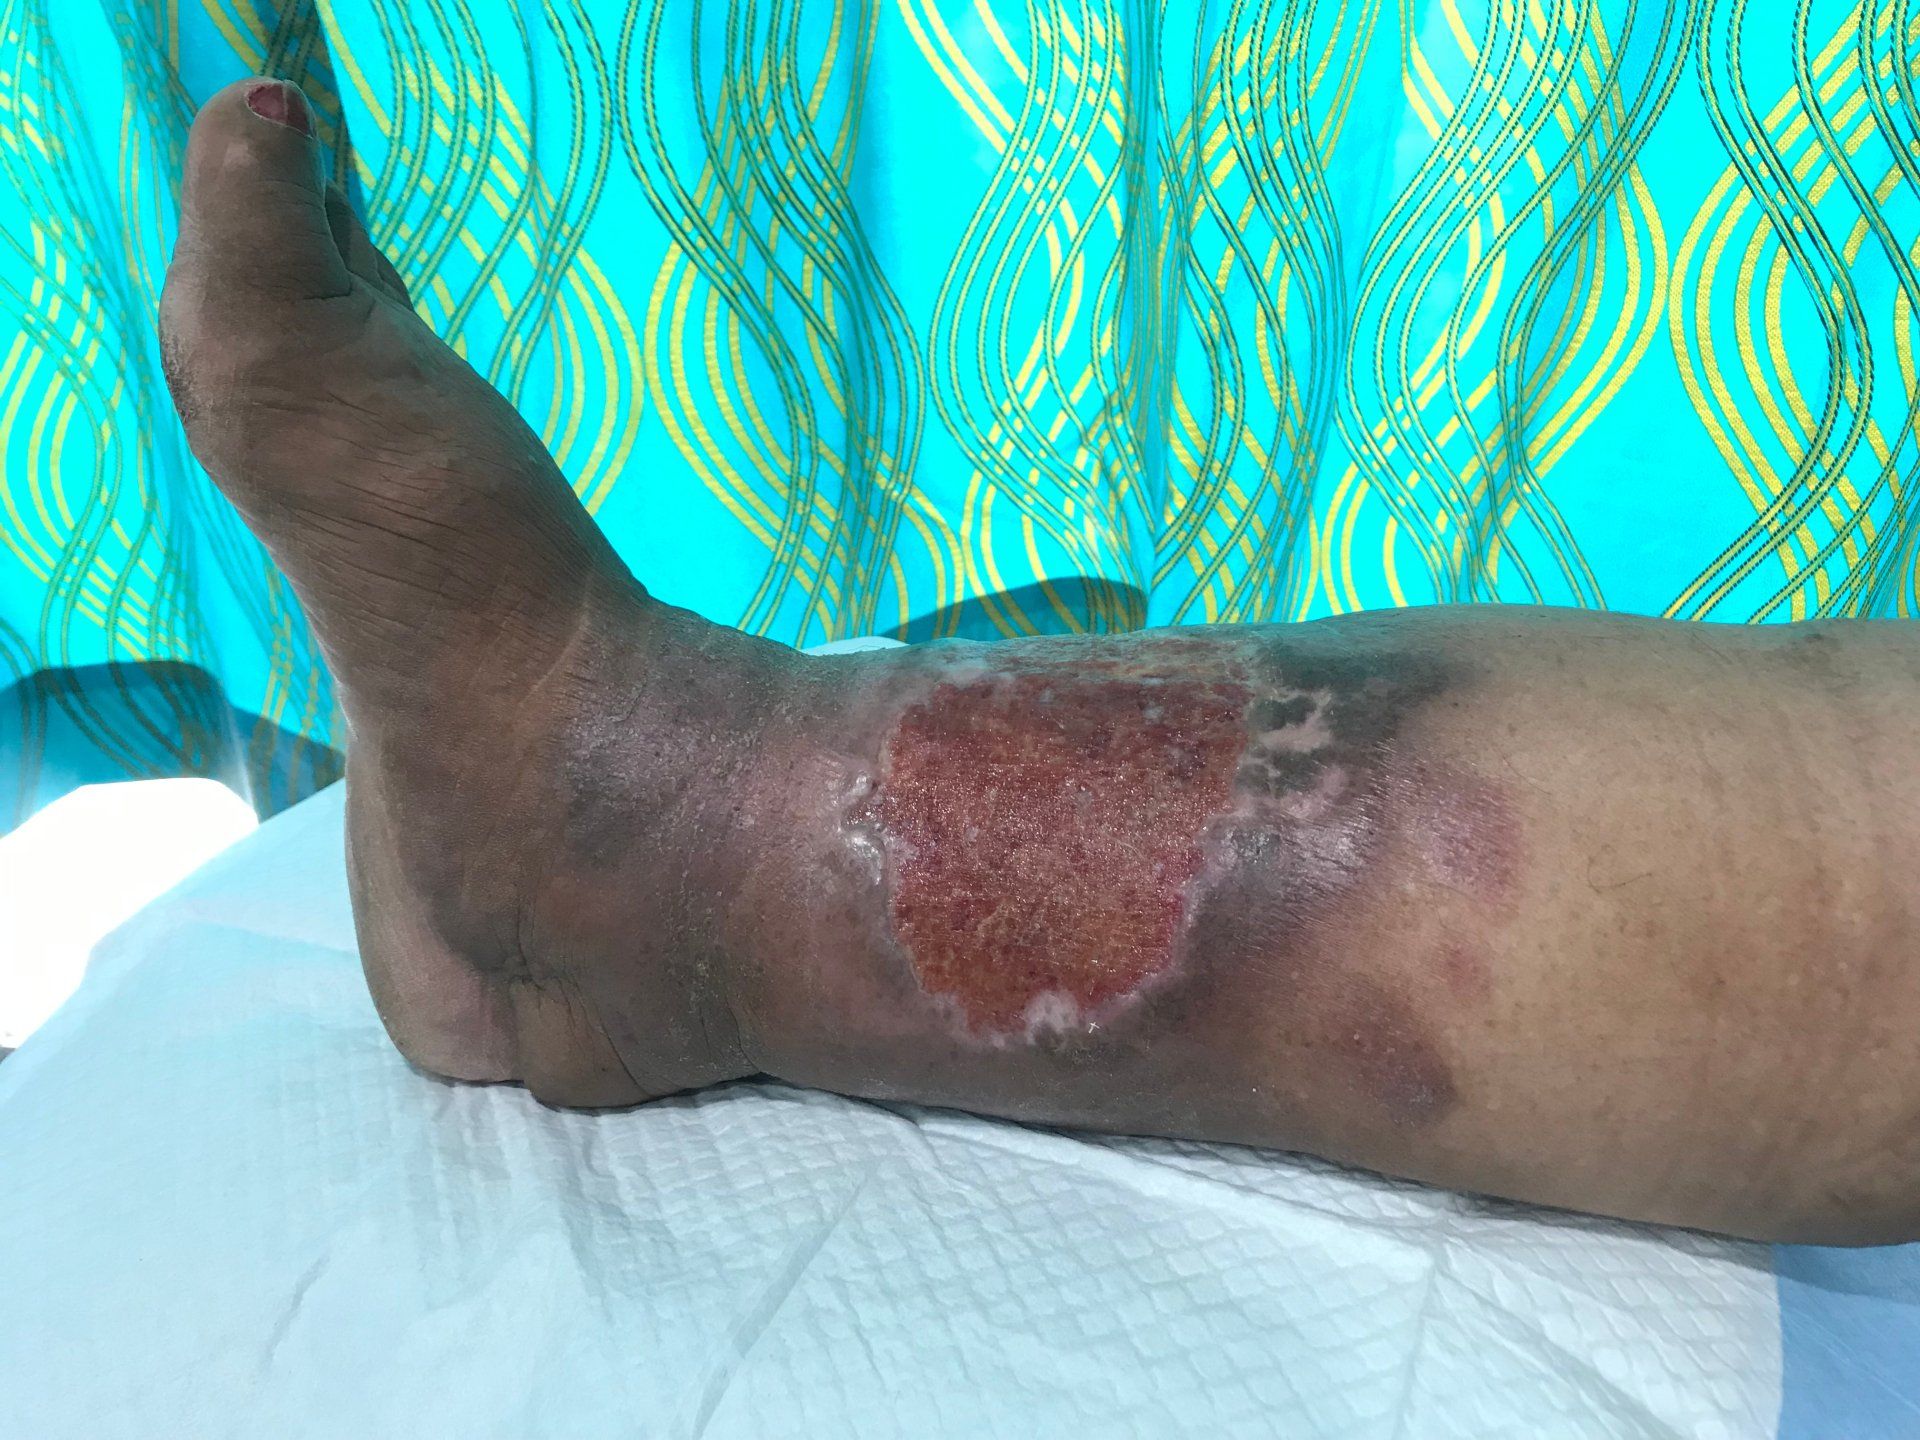 Injured Leg Treatment with Bandage — Jacksonville, FL — Wells Surgical Services LLC